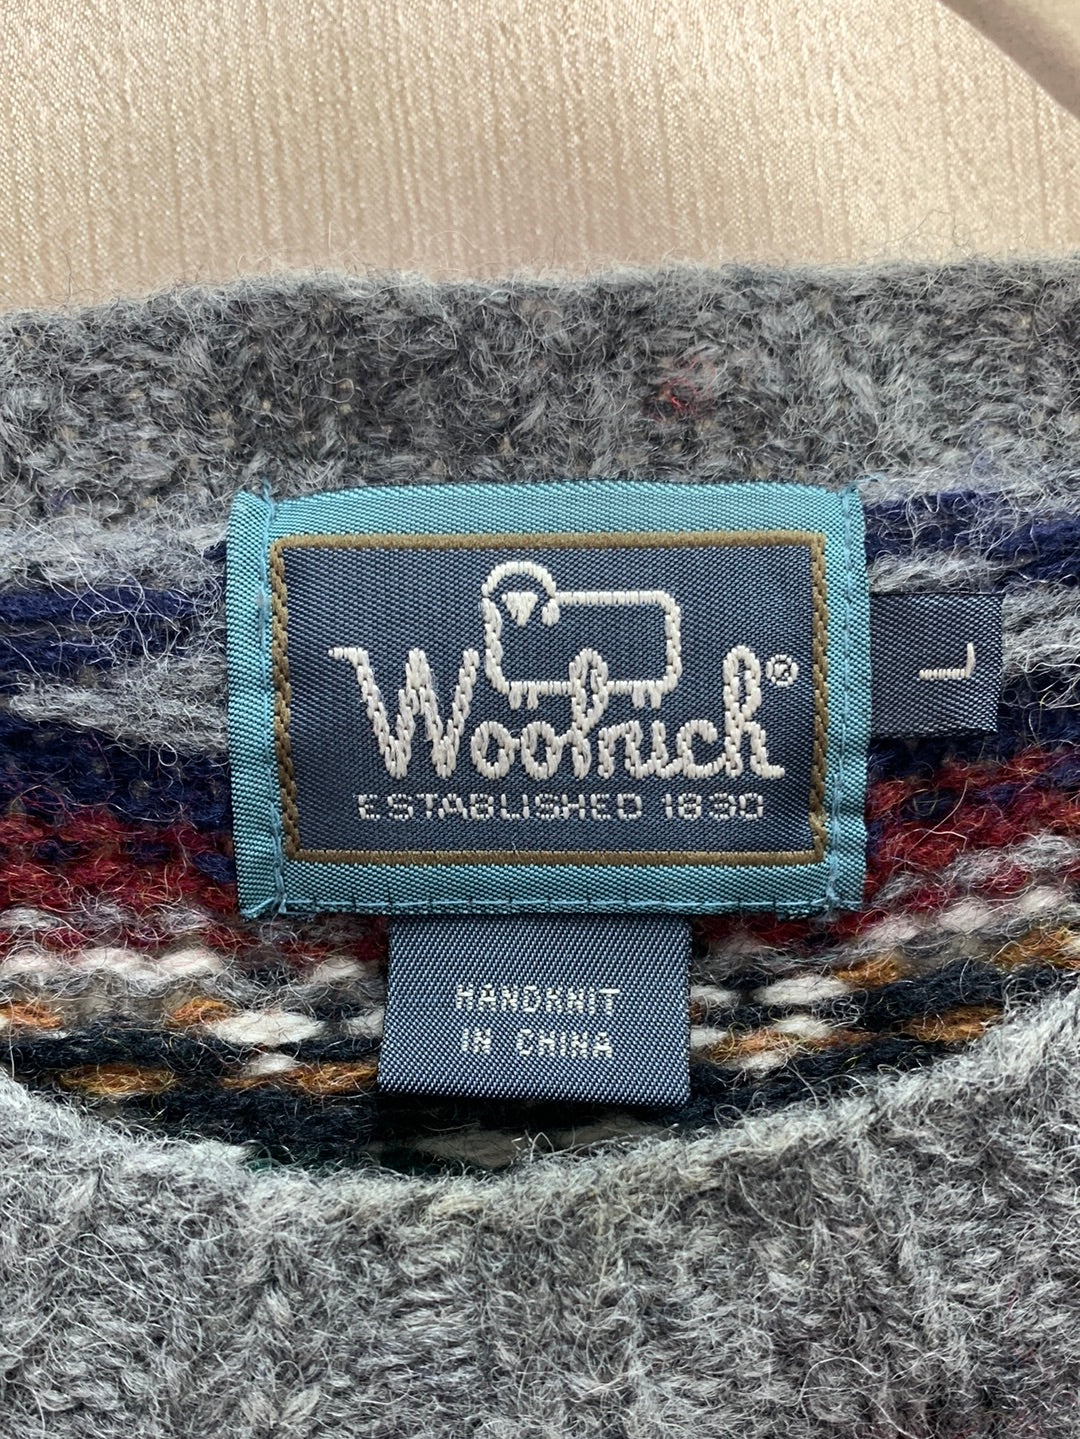 VINTAGE - WOOLRICH multicolor HandKnit Wool Aztec Pullover Sweater - L